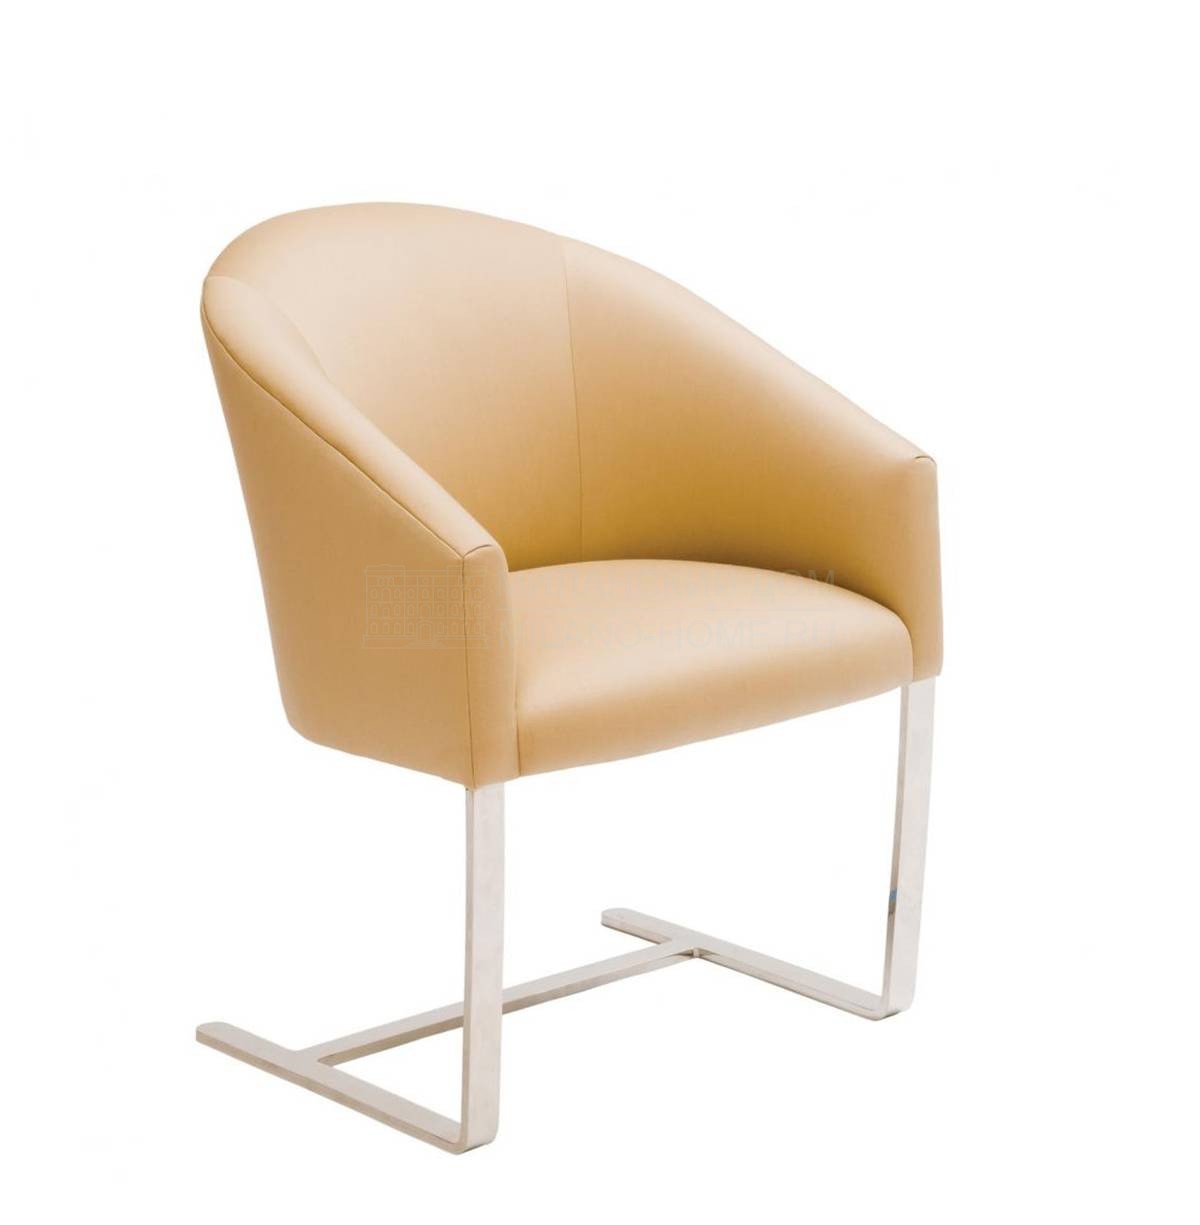 Полукресло Cantilever Tub Chair из Италии фабрики RUBELLI Casa